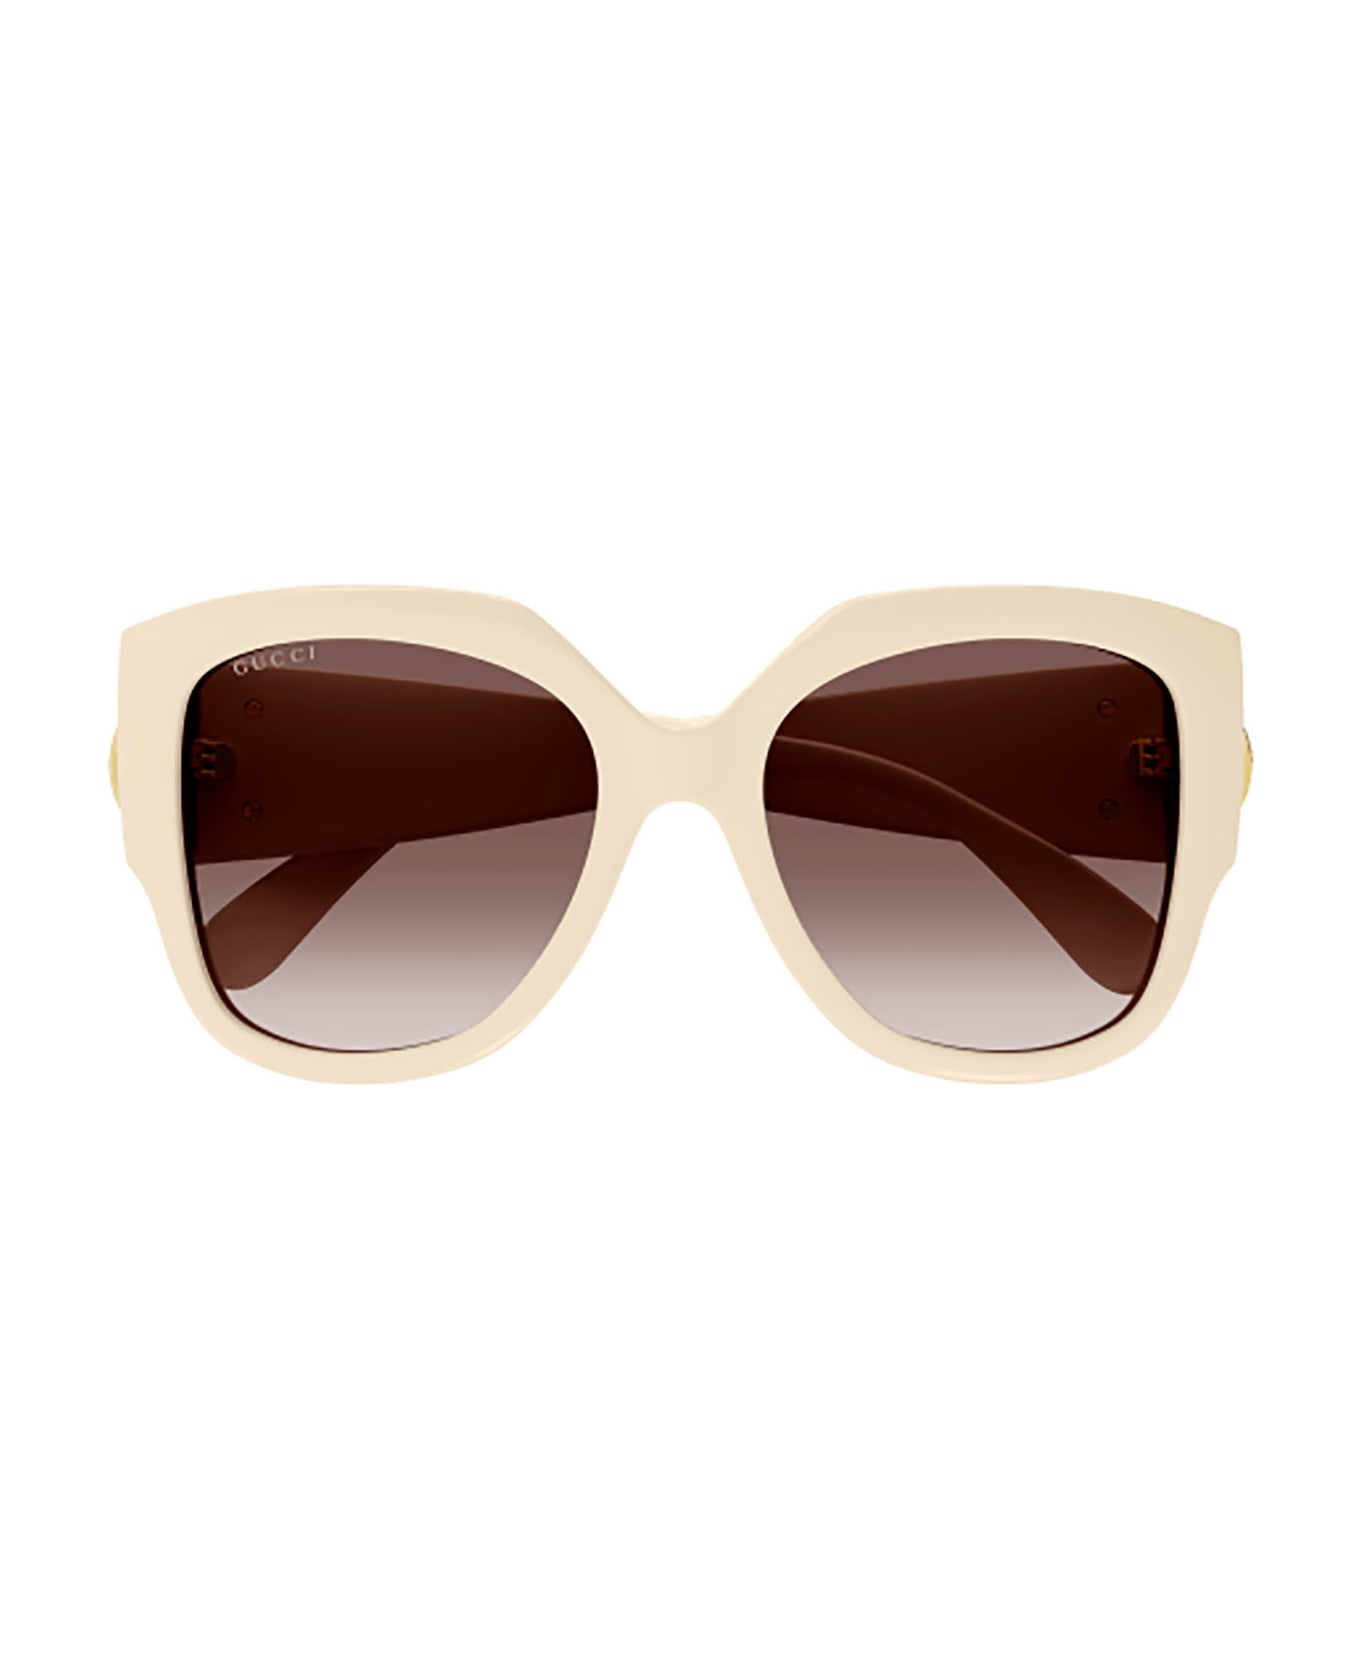 Gucci Eyewear GG1407S Sunglasses - Ivory Ivory Brown